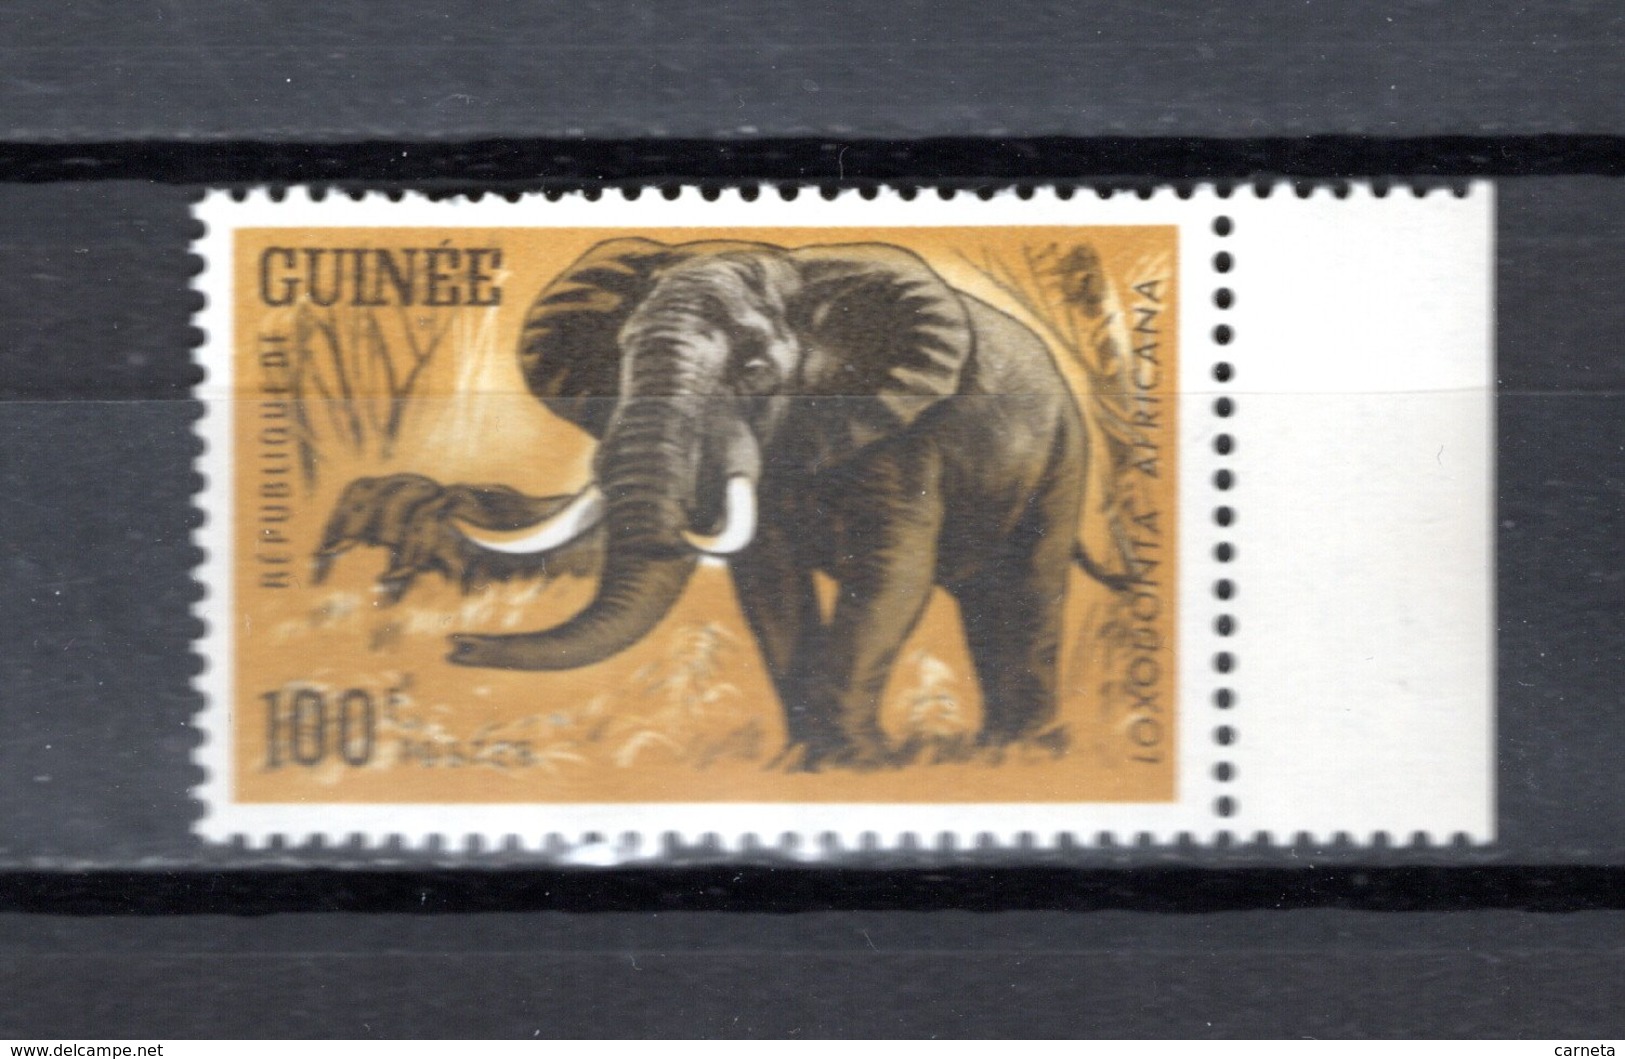 GUINEE N° 206  NEUF SANS CHARNIERE COTE 3.00€  ANIMAUX ELEPHANT - Guinée (1958-...)